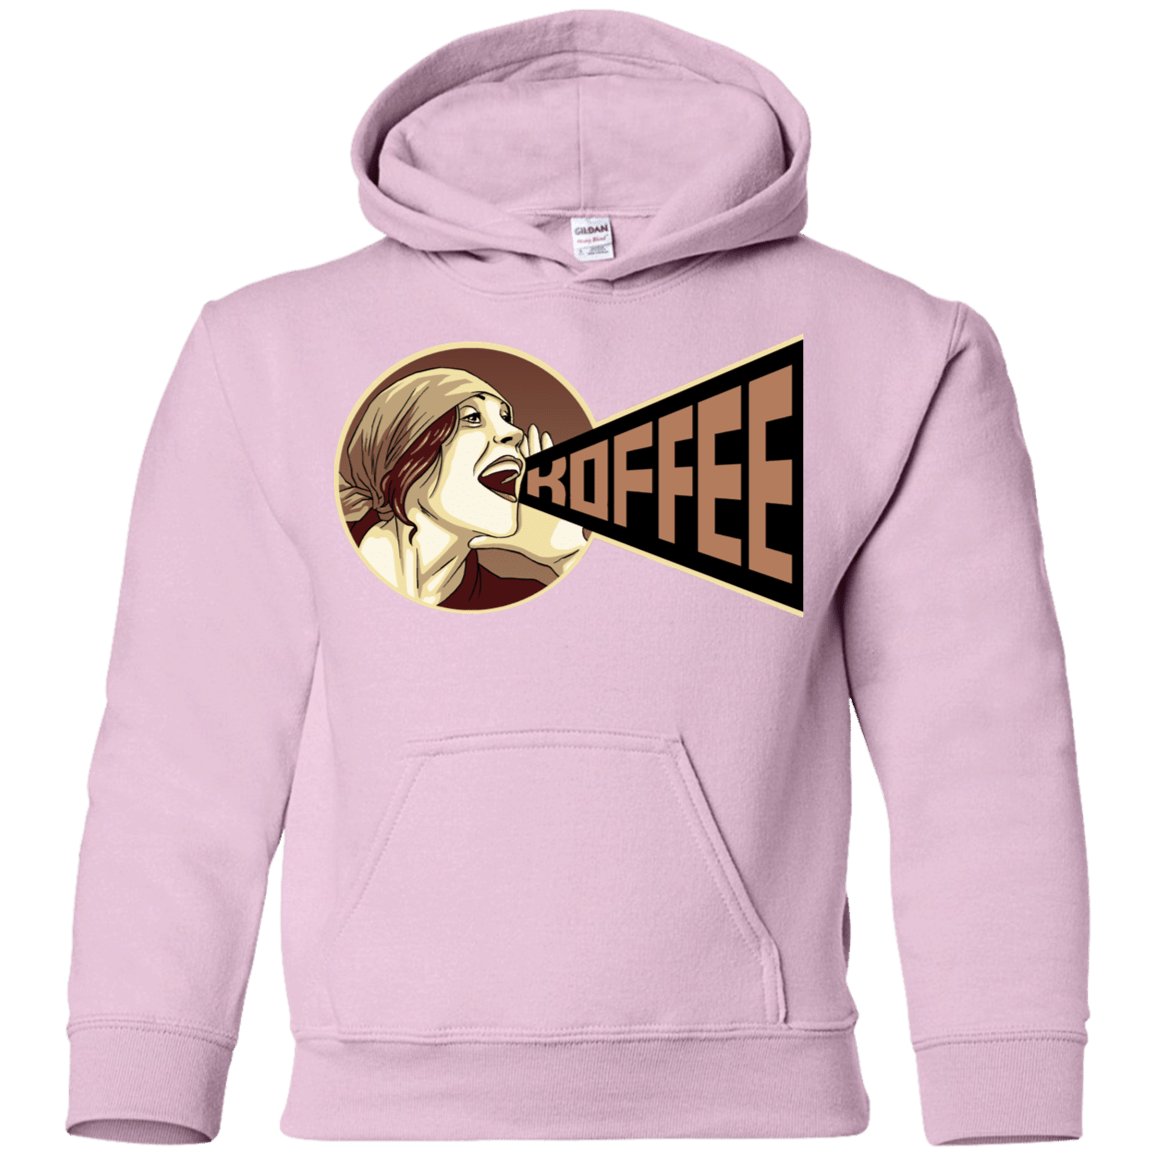 Sweatshirts Light Pink / YS Koffee Youth Hoodie